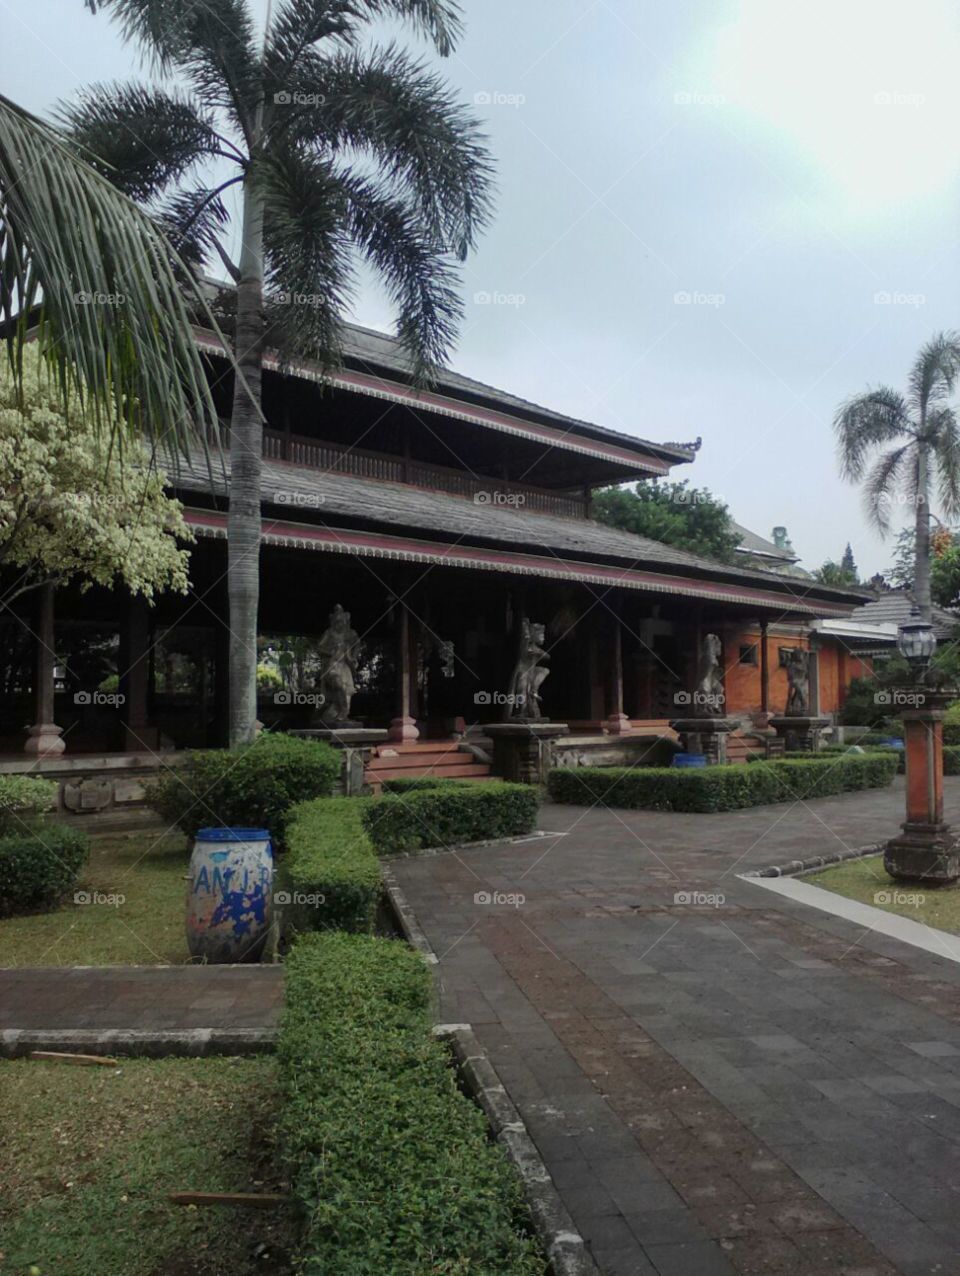 Taman mini endah (Jakarta,Indonesia)